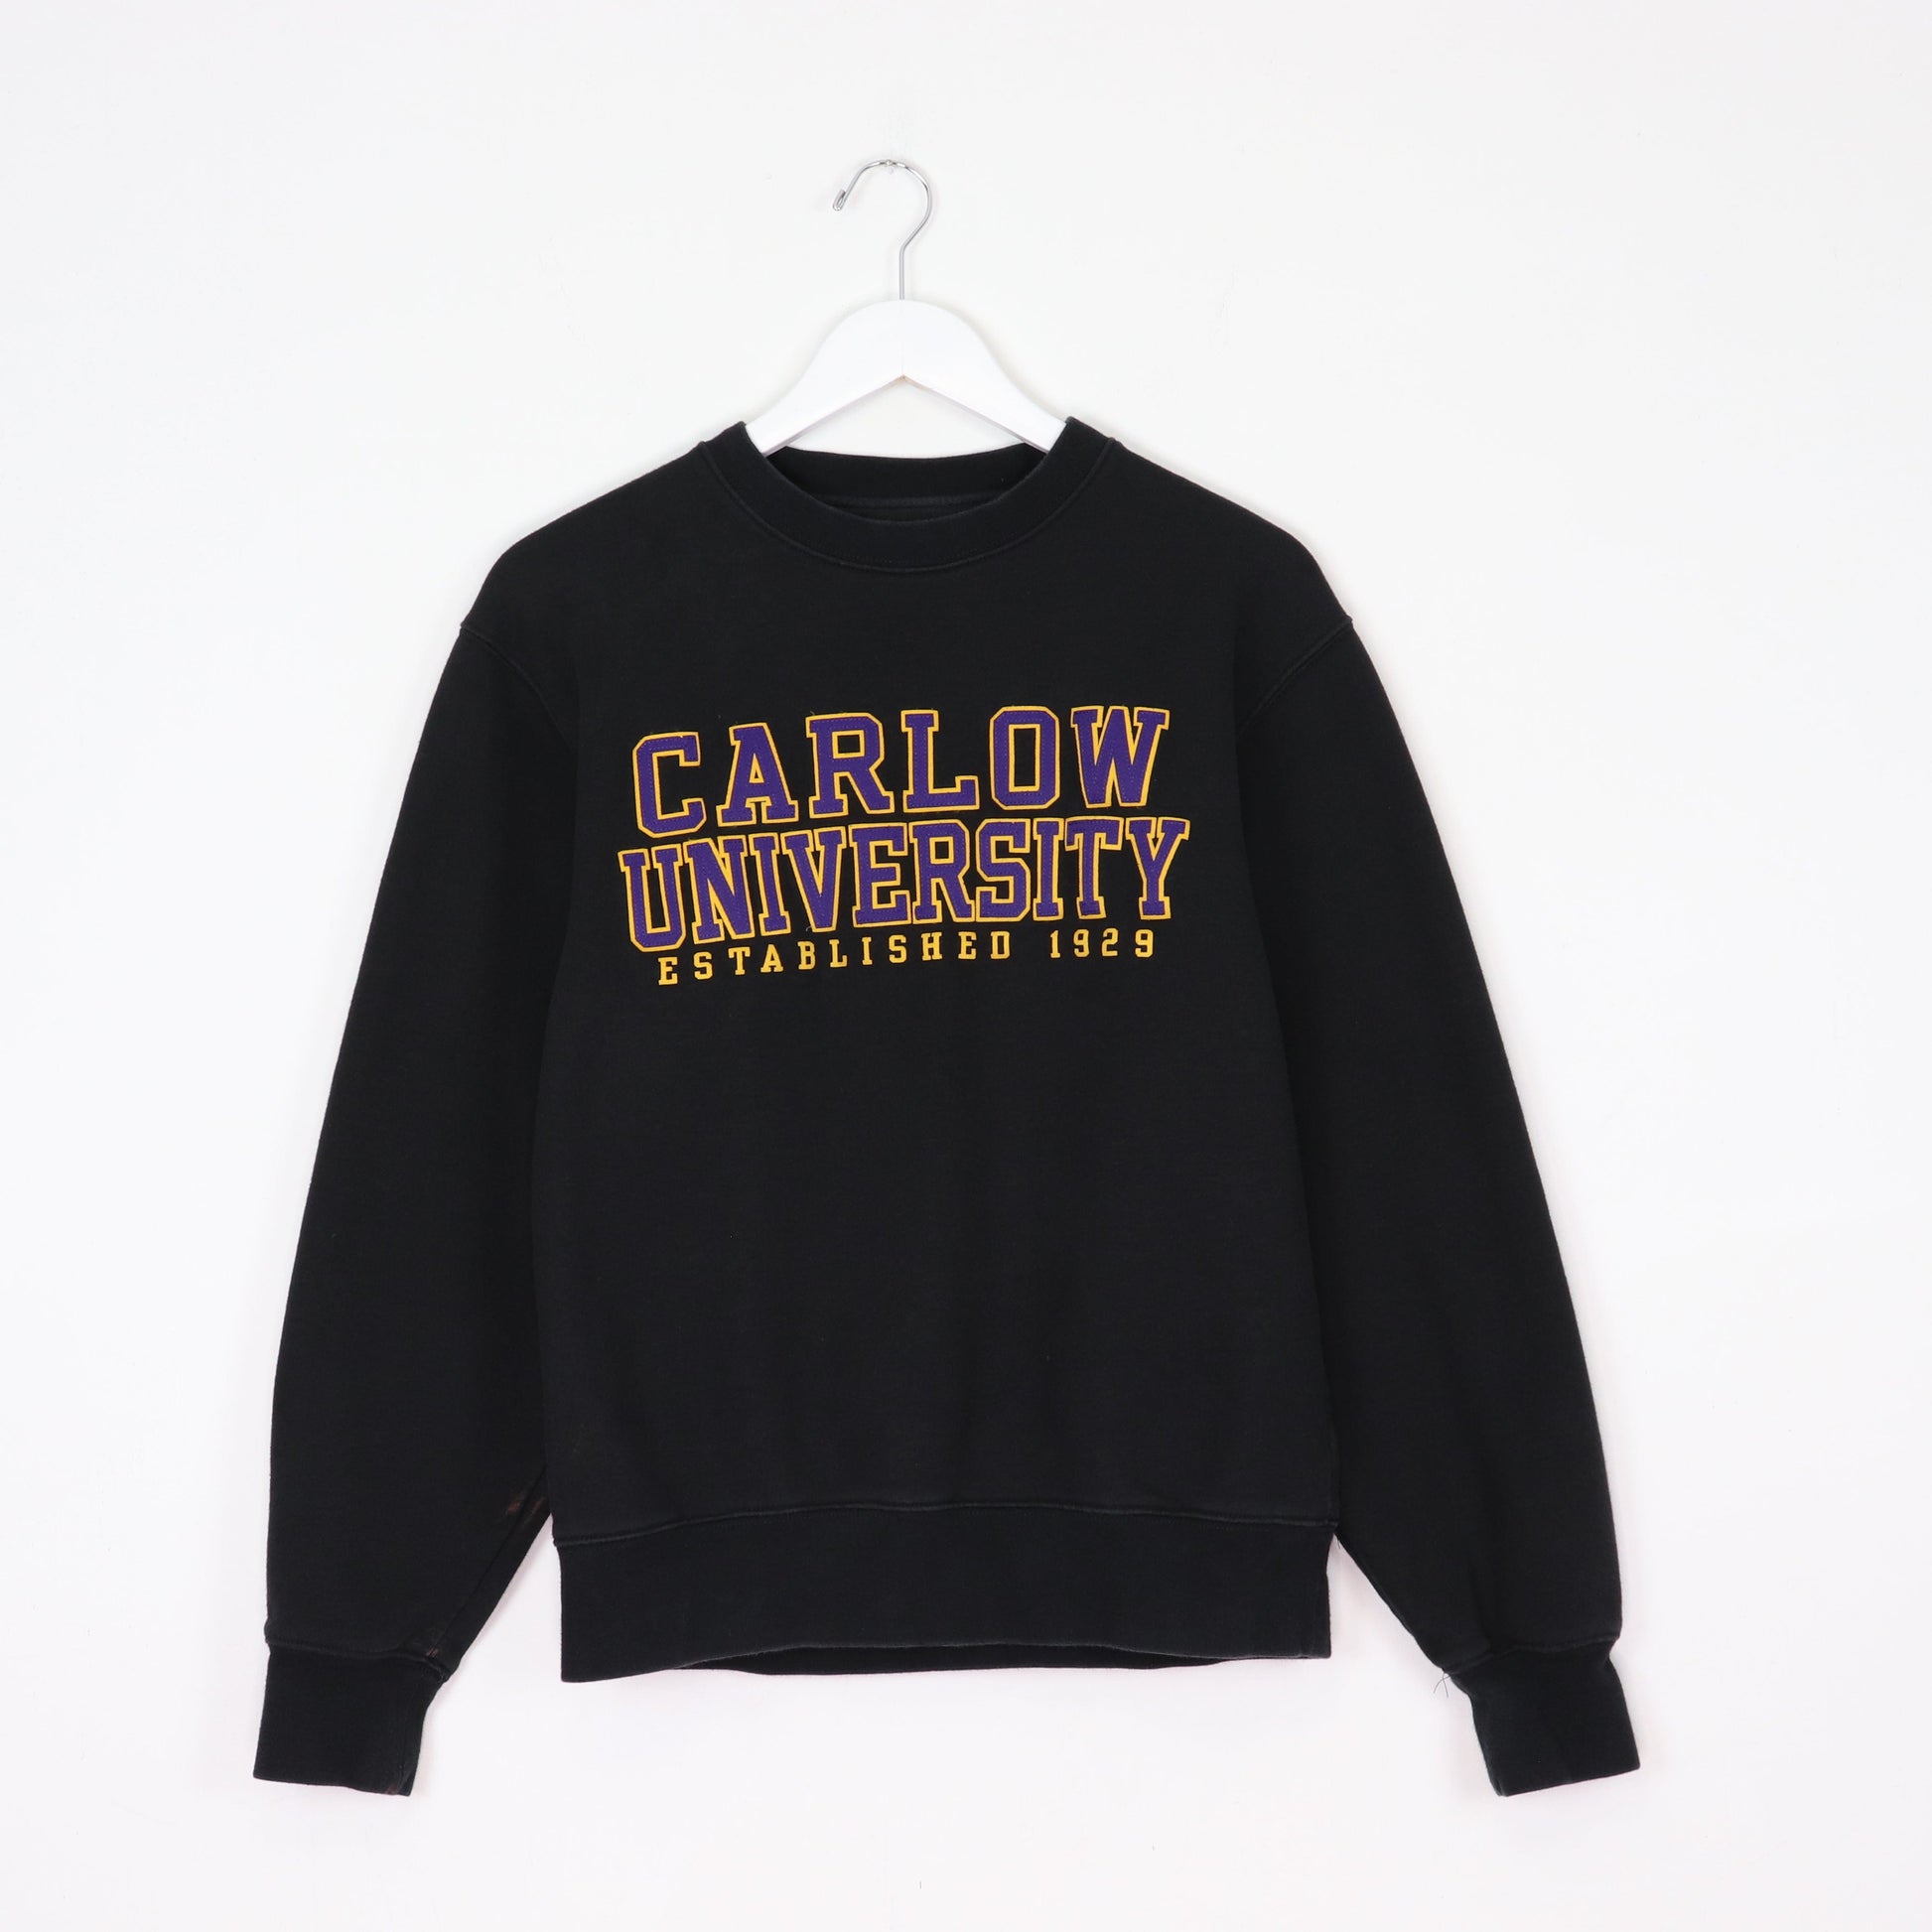 Collegiate Sweatshirts & Hoodies Carlow University Sweatshirt Size Small